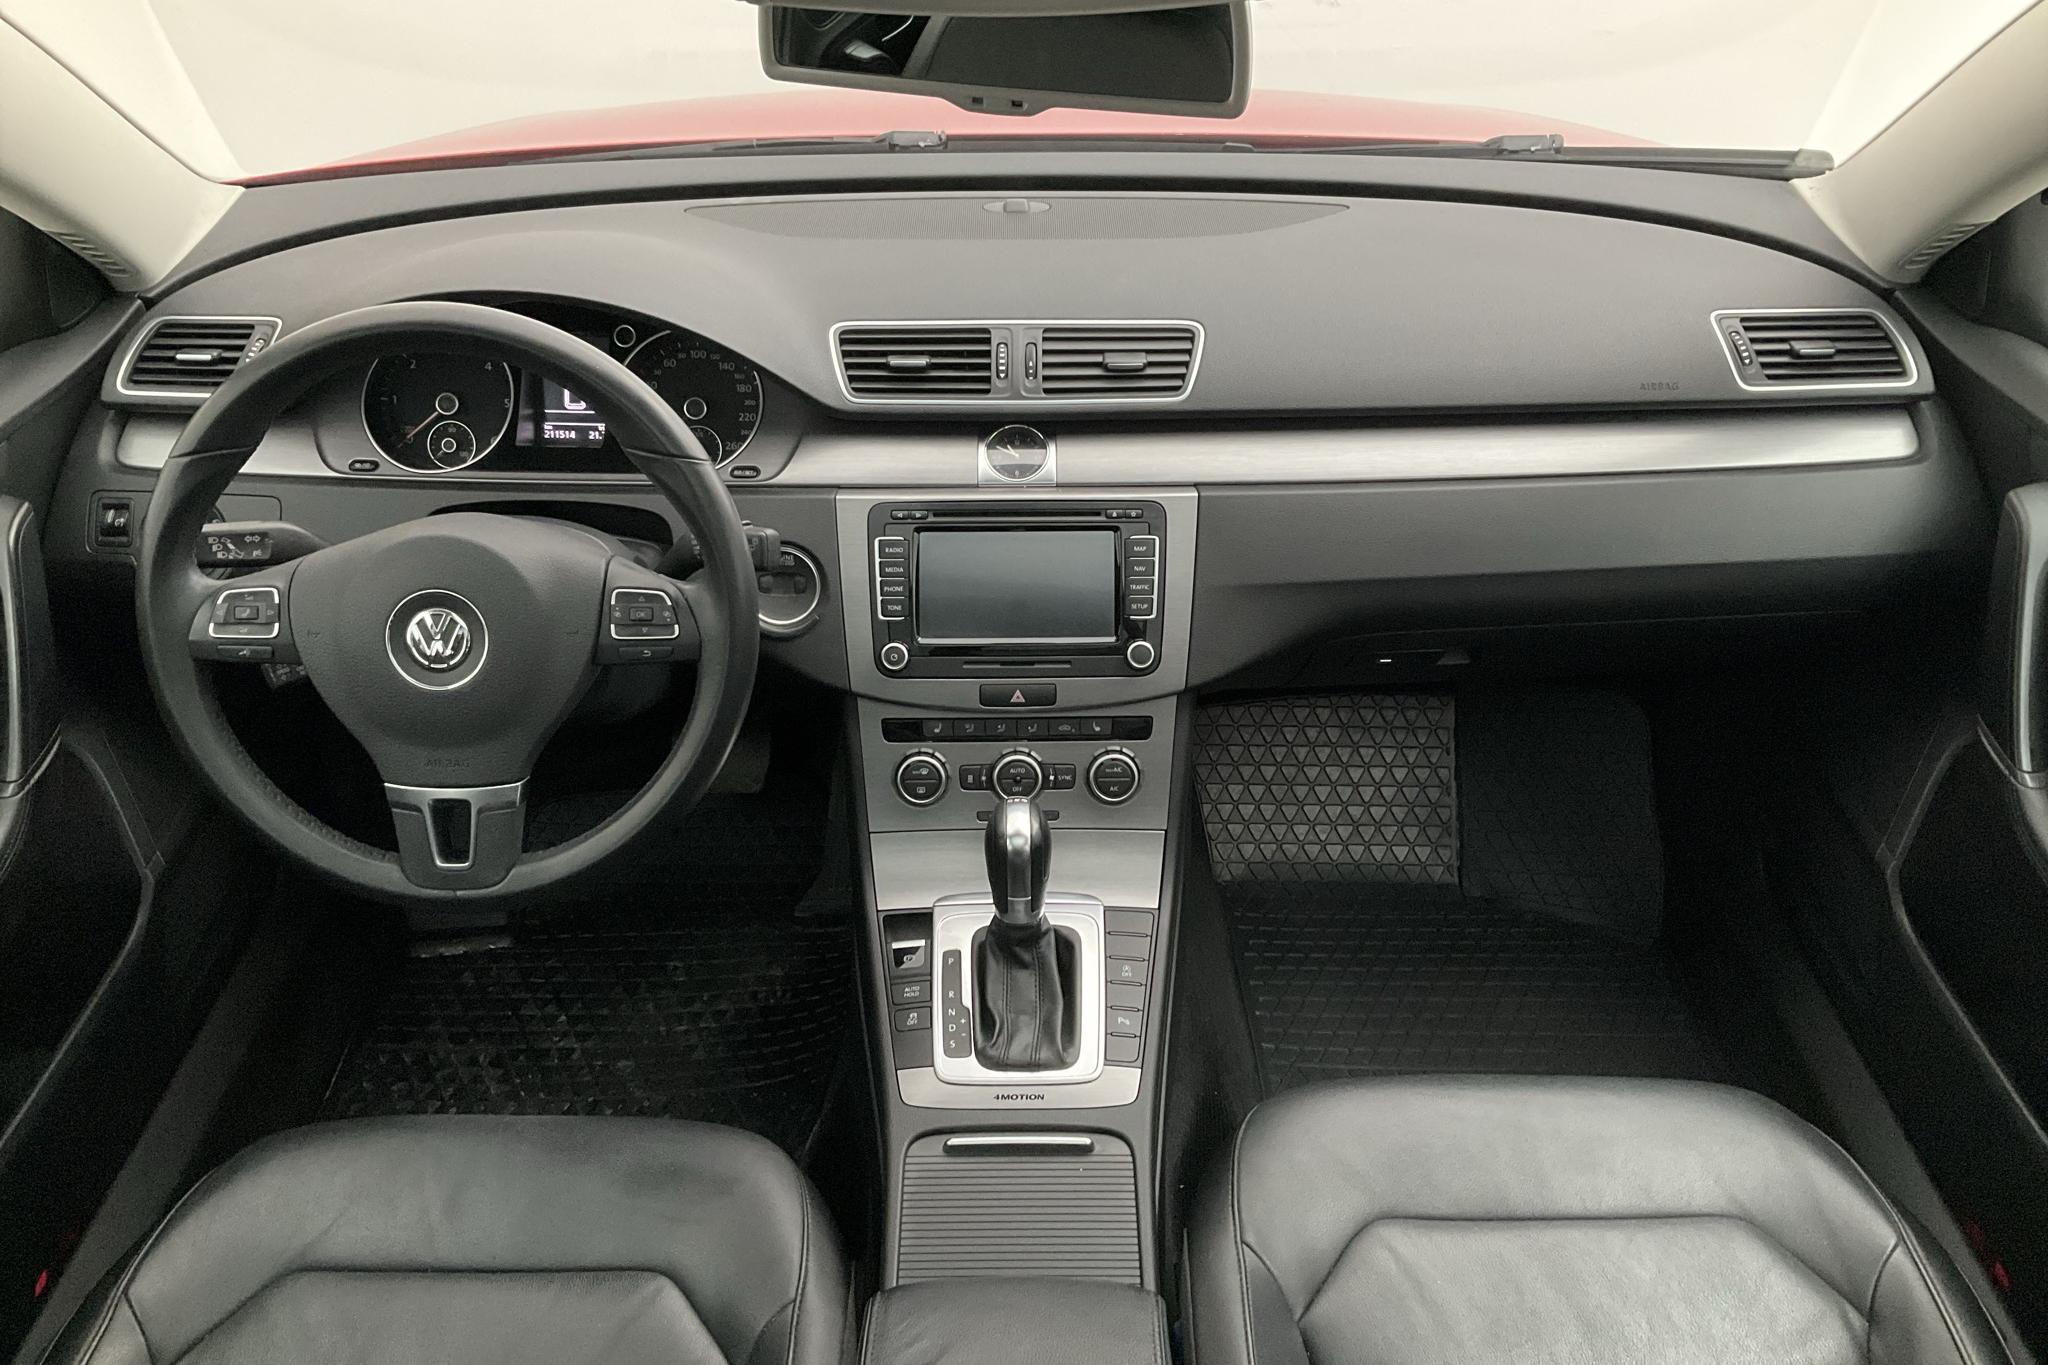 VW Passat 2.0 TDI BlueMotion Technology Variant 4Motion (170hk) - 211 510 km - Automaattinen - punainen - 2013